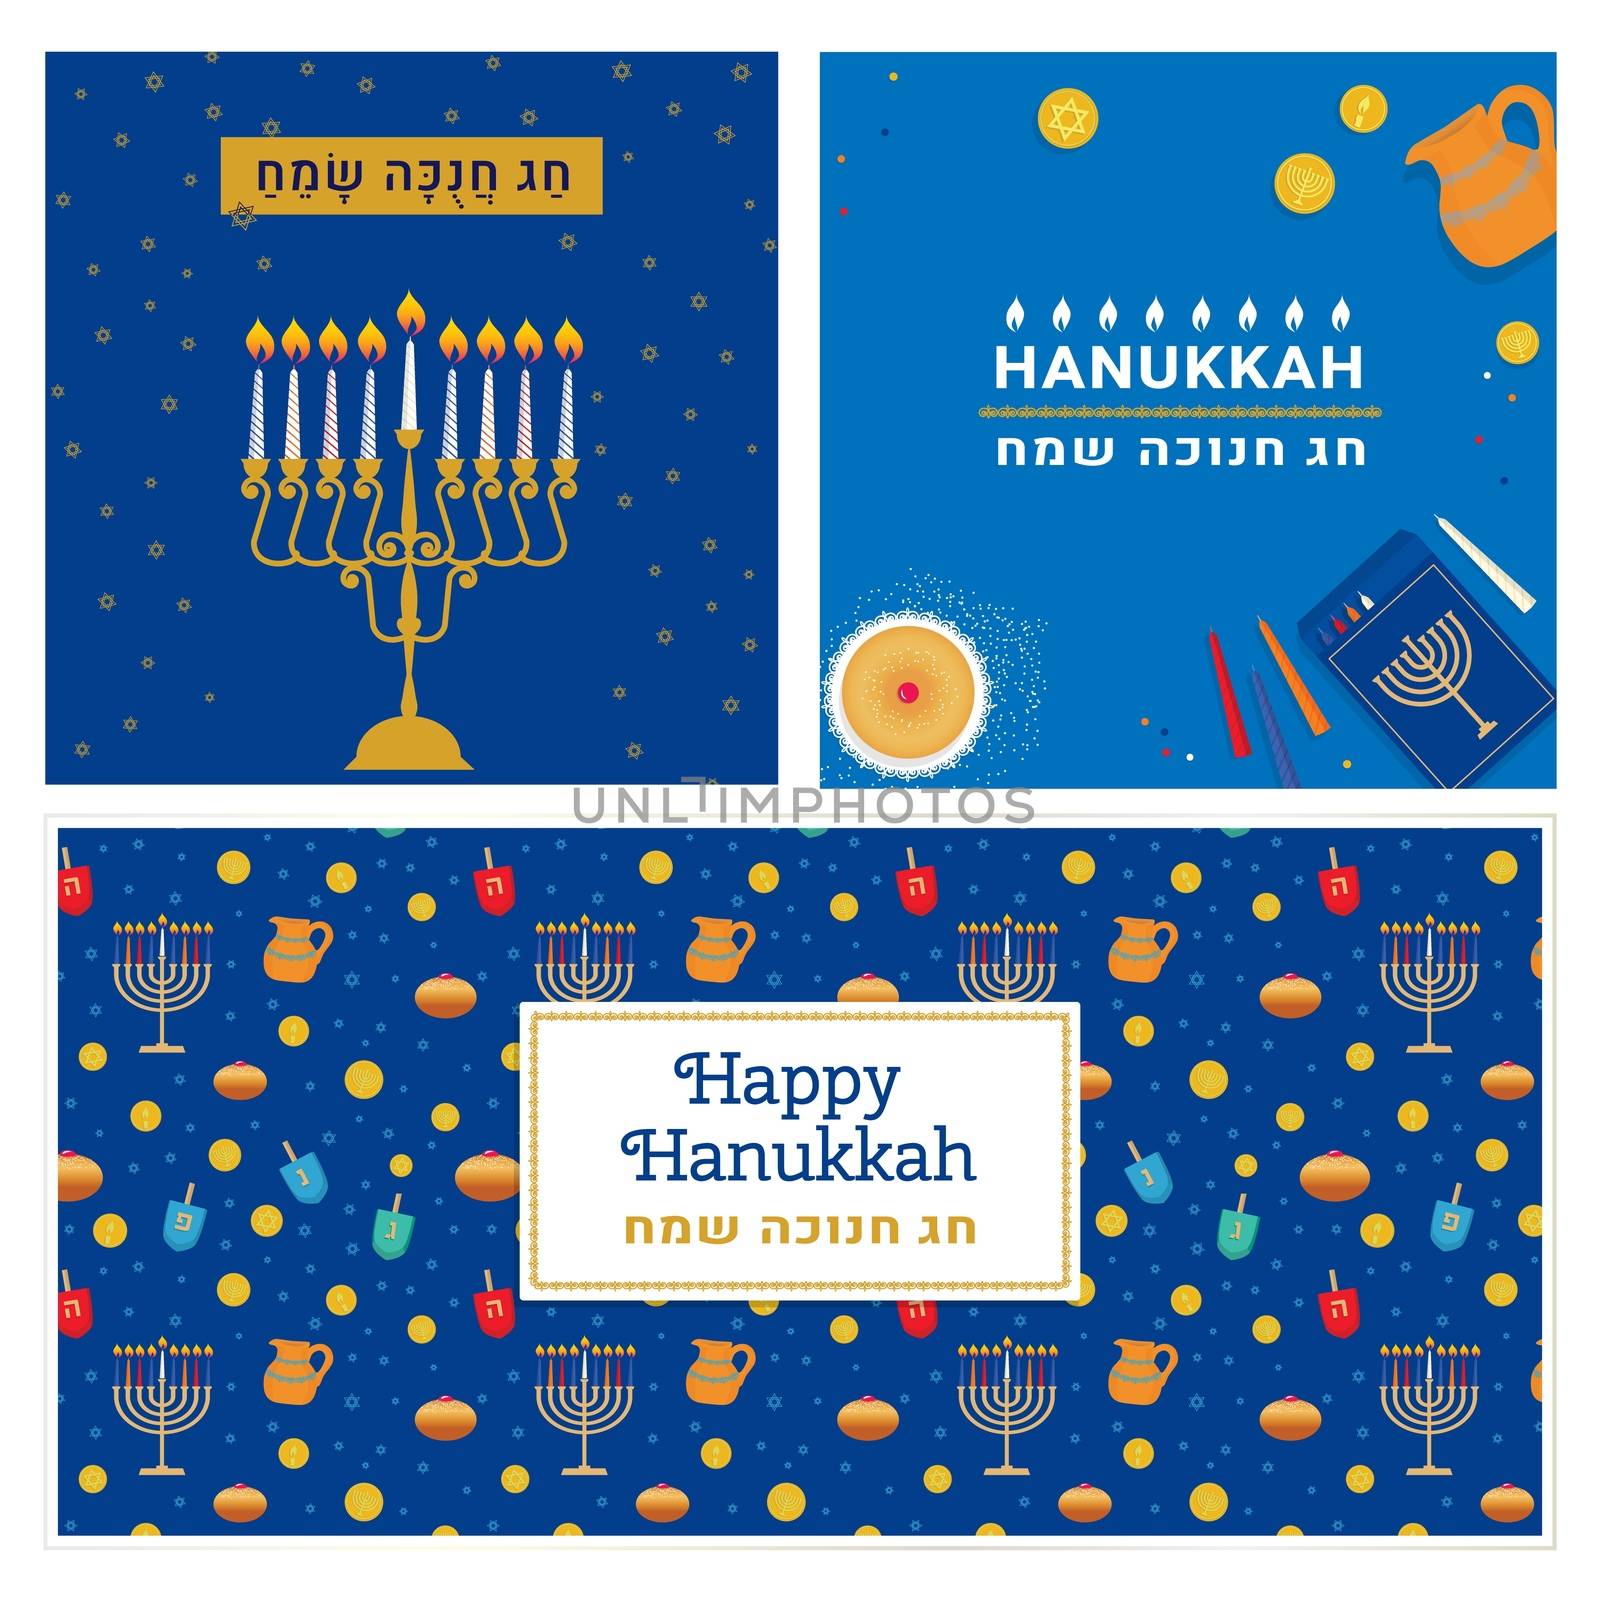 Happy Hanukkah, Jewish Festival of Lights Chanukkah holiday banners set. Happy Hanukkah in Hebrew. by Sofir